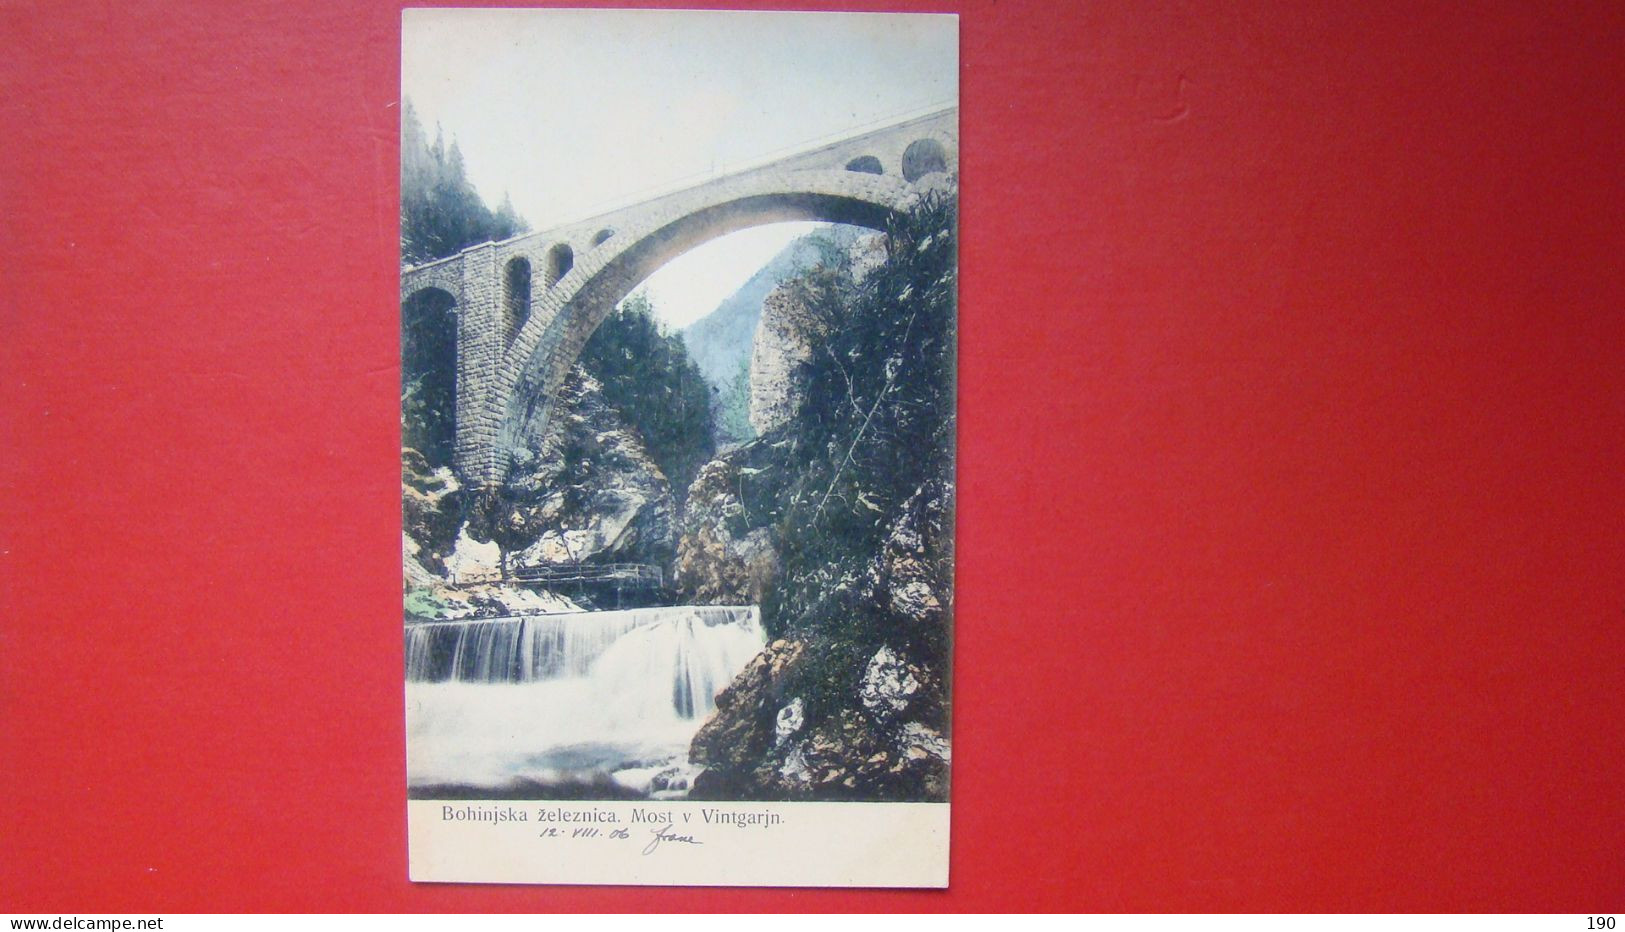 Bohinjska Zeleznica.Most V Vintgarju.Bohinj Railway.The Bridge In Vintgar.Fran Pavlin - Structures